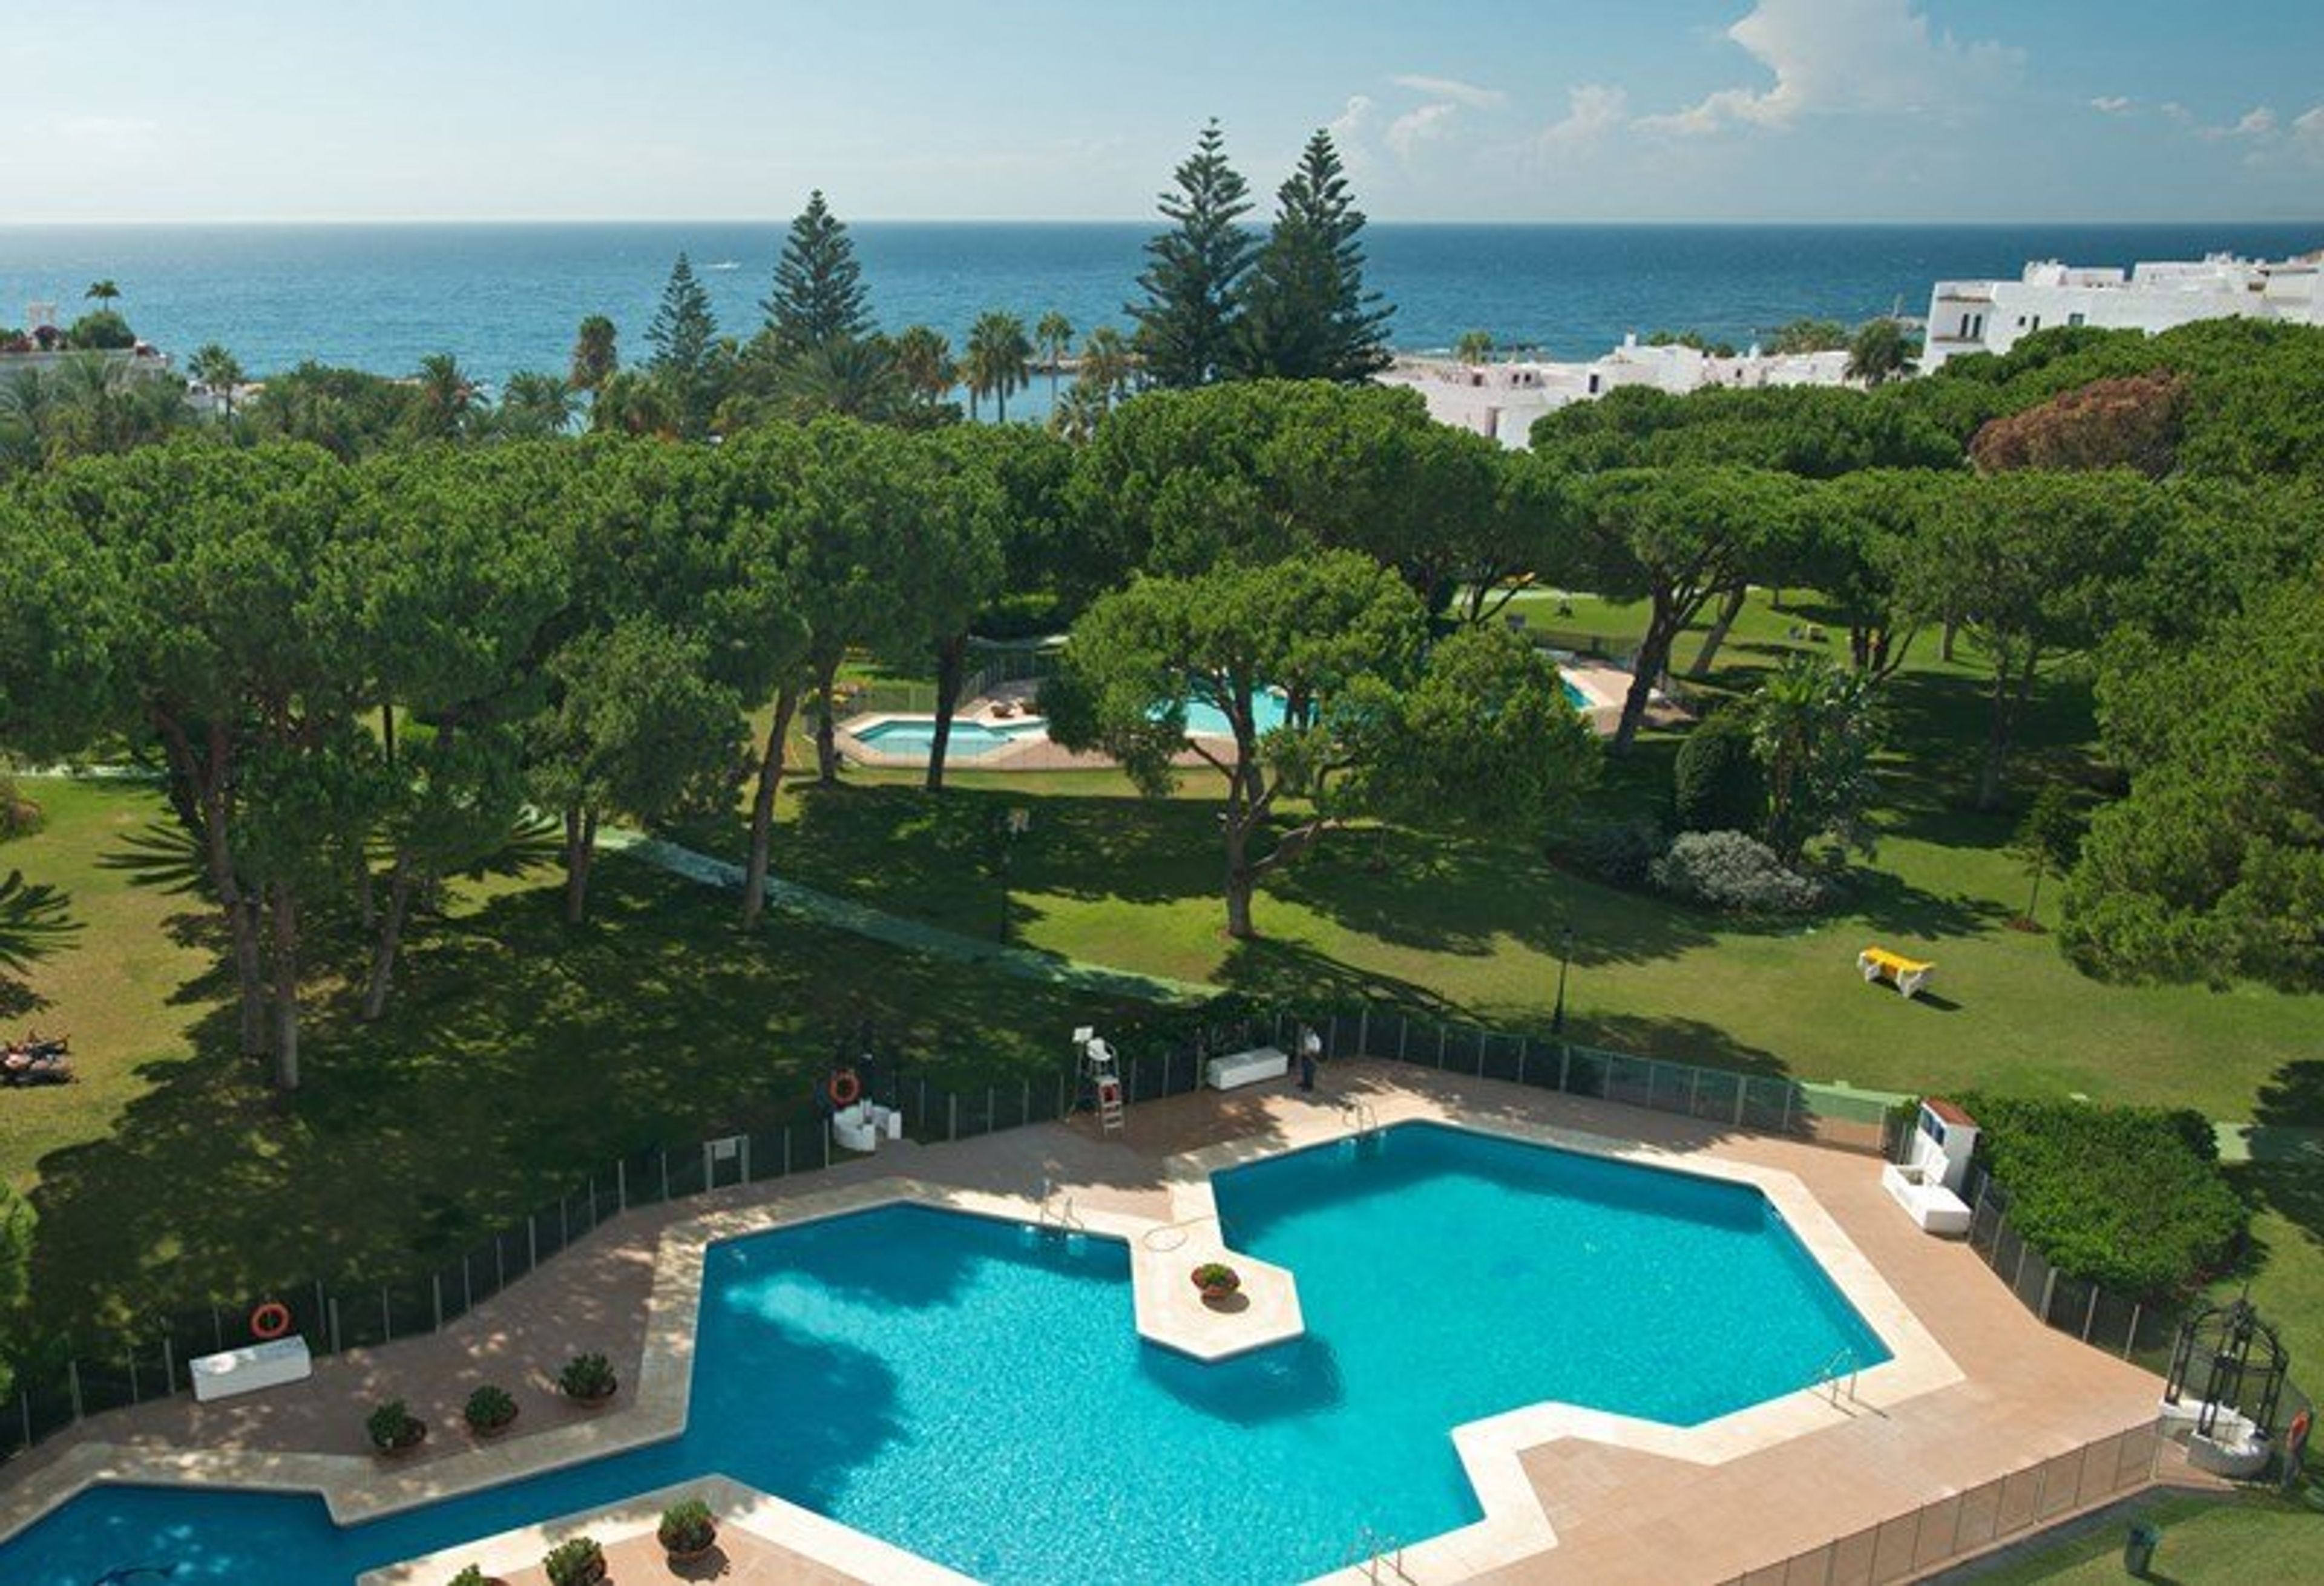 Partial aerial view of Club Playas Del Duque gardens and beach in Puerto Banus